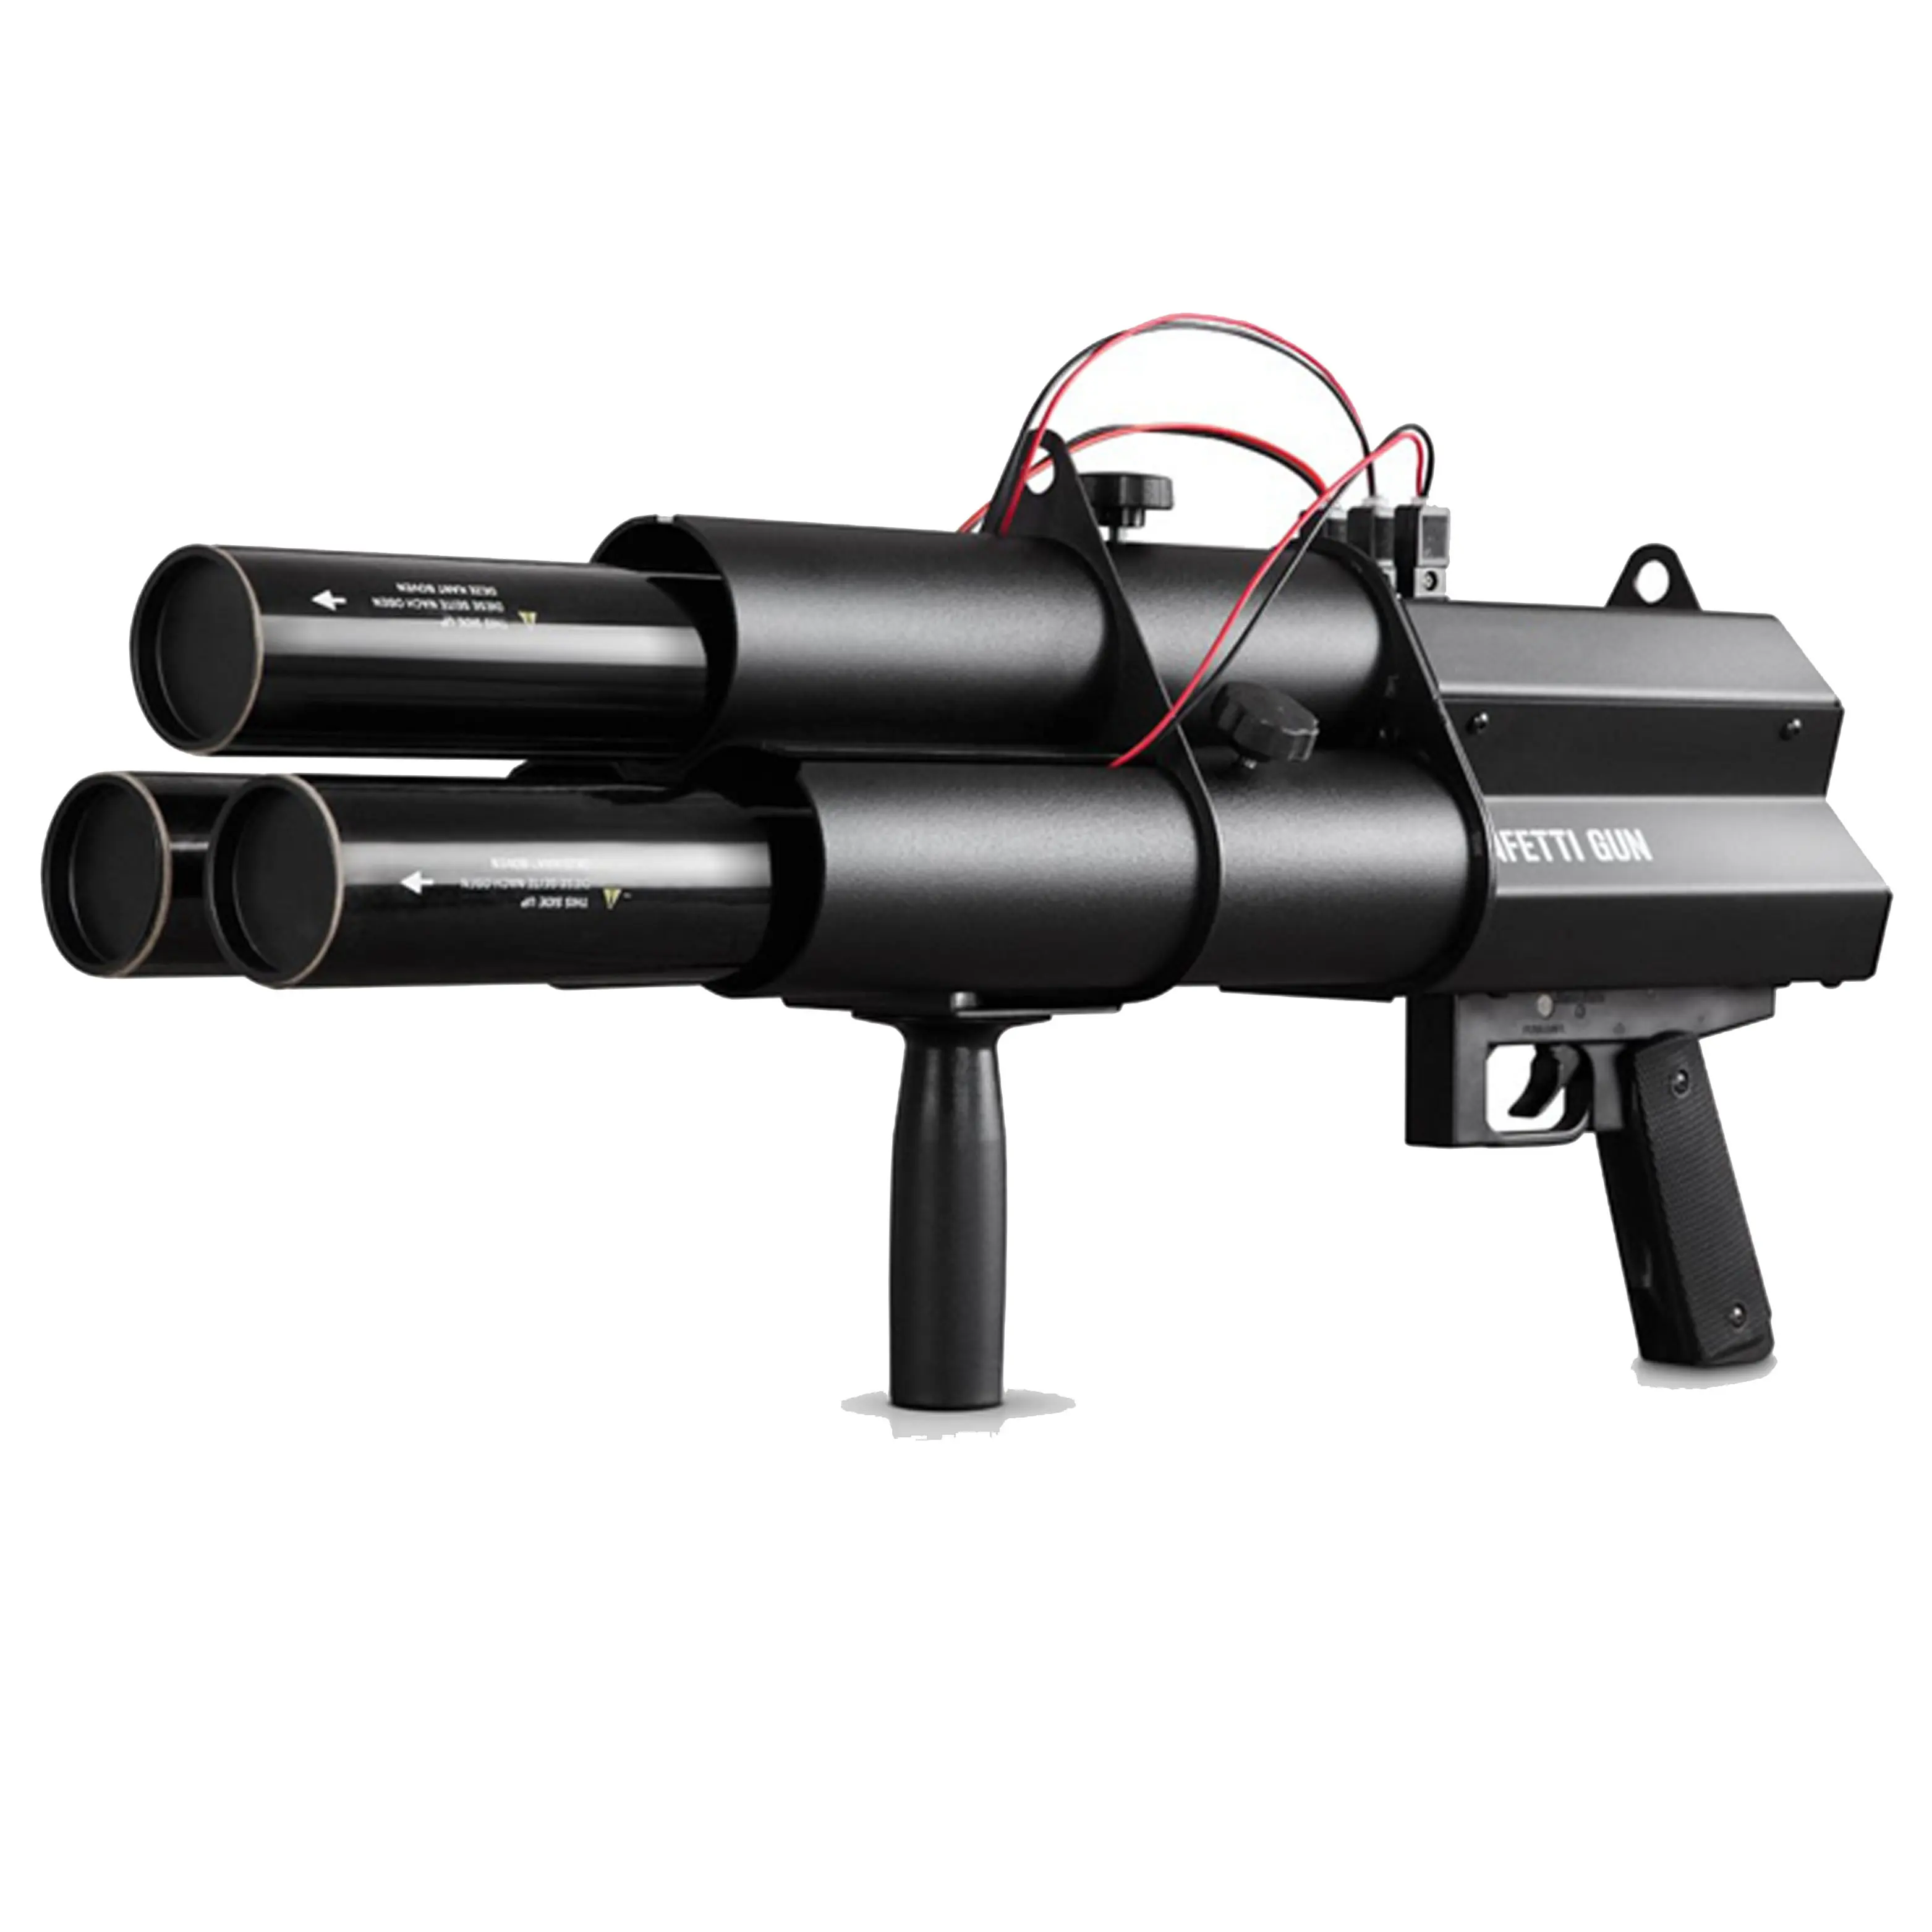 Lanzador eléctrico de mano con 3 disparos, máquina Popper recargable con tres cabezales, pistola de fiesta de confeti alimentada por batería